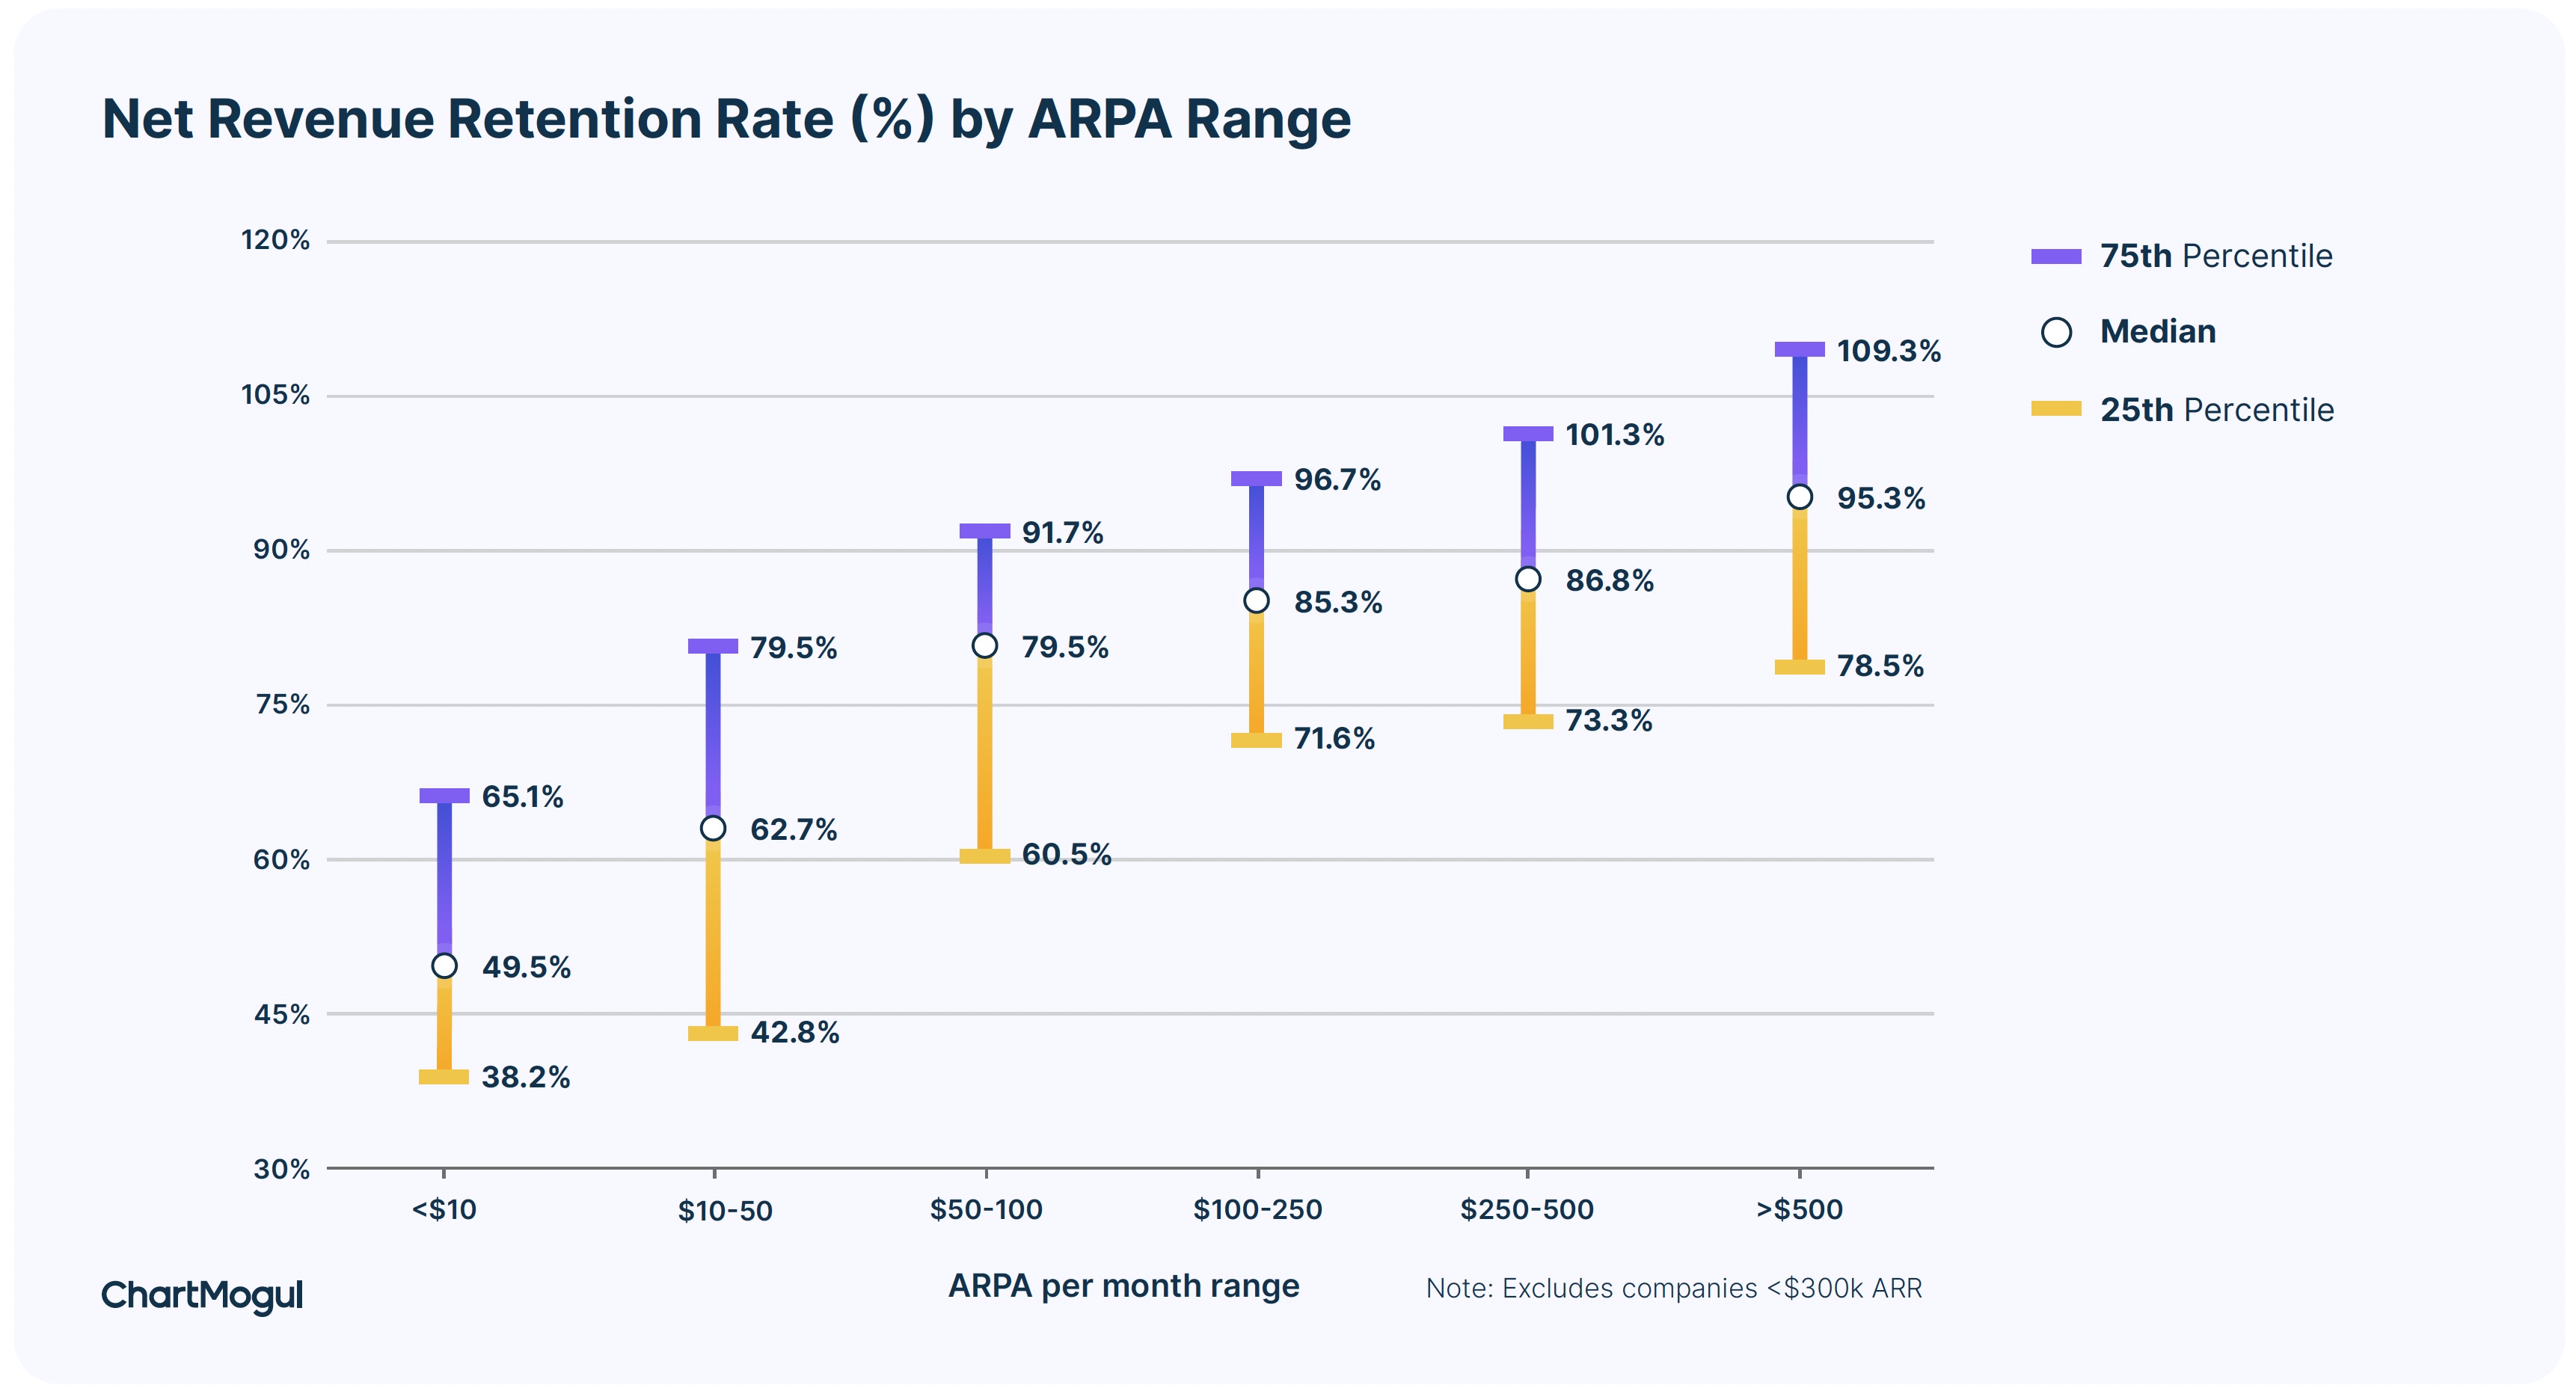 Net revenue retention rate (%) by ARPA range.